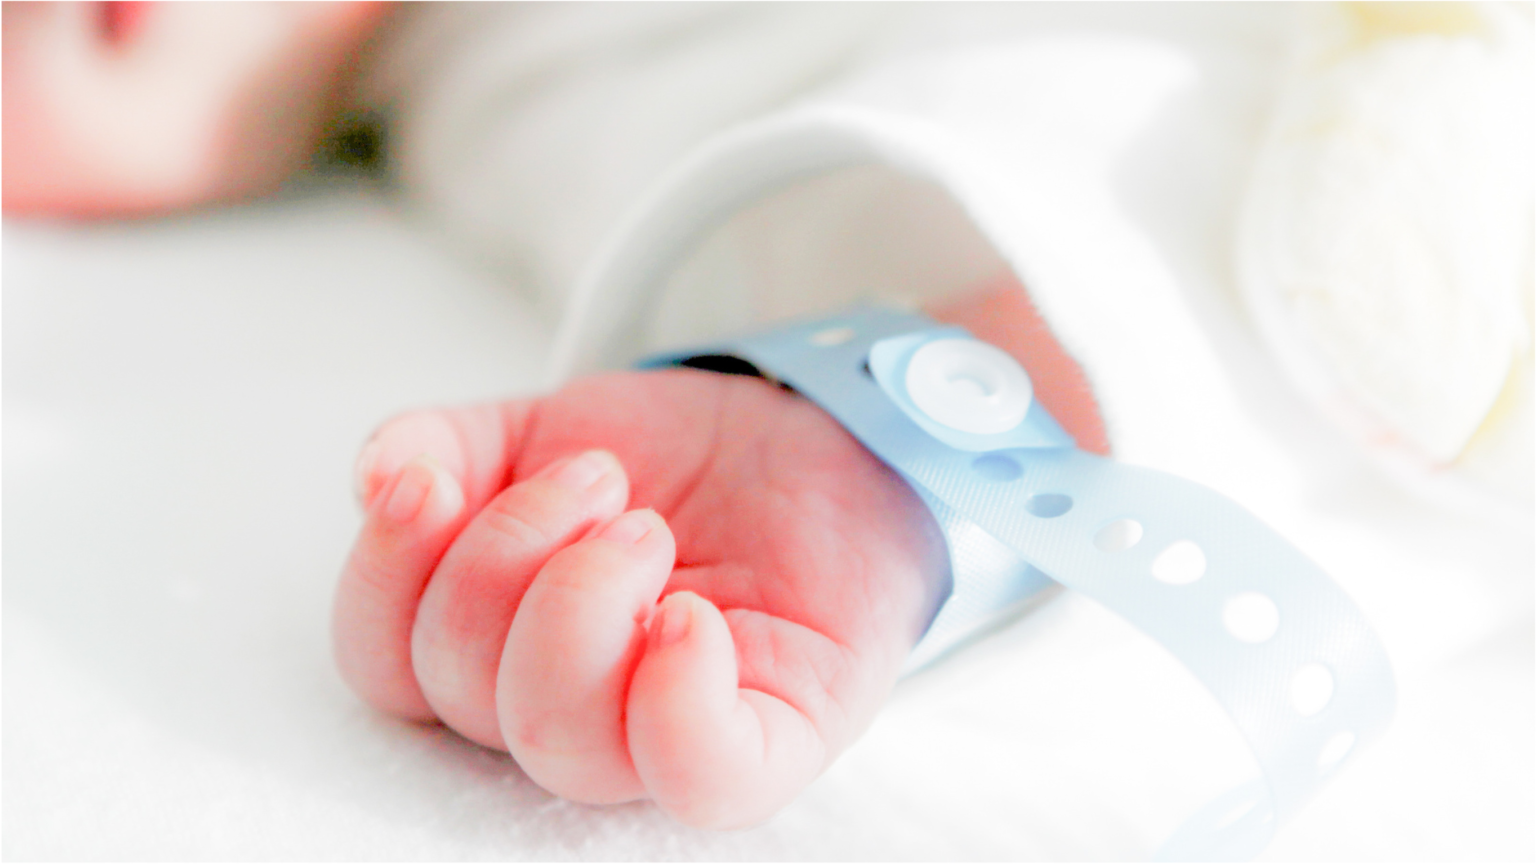 Newborn baby alone in hospital